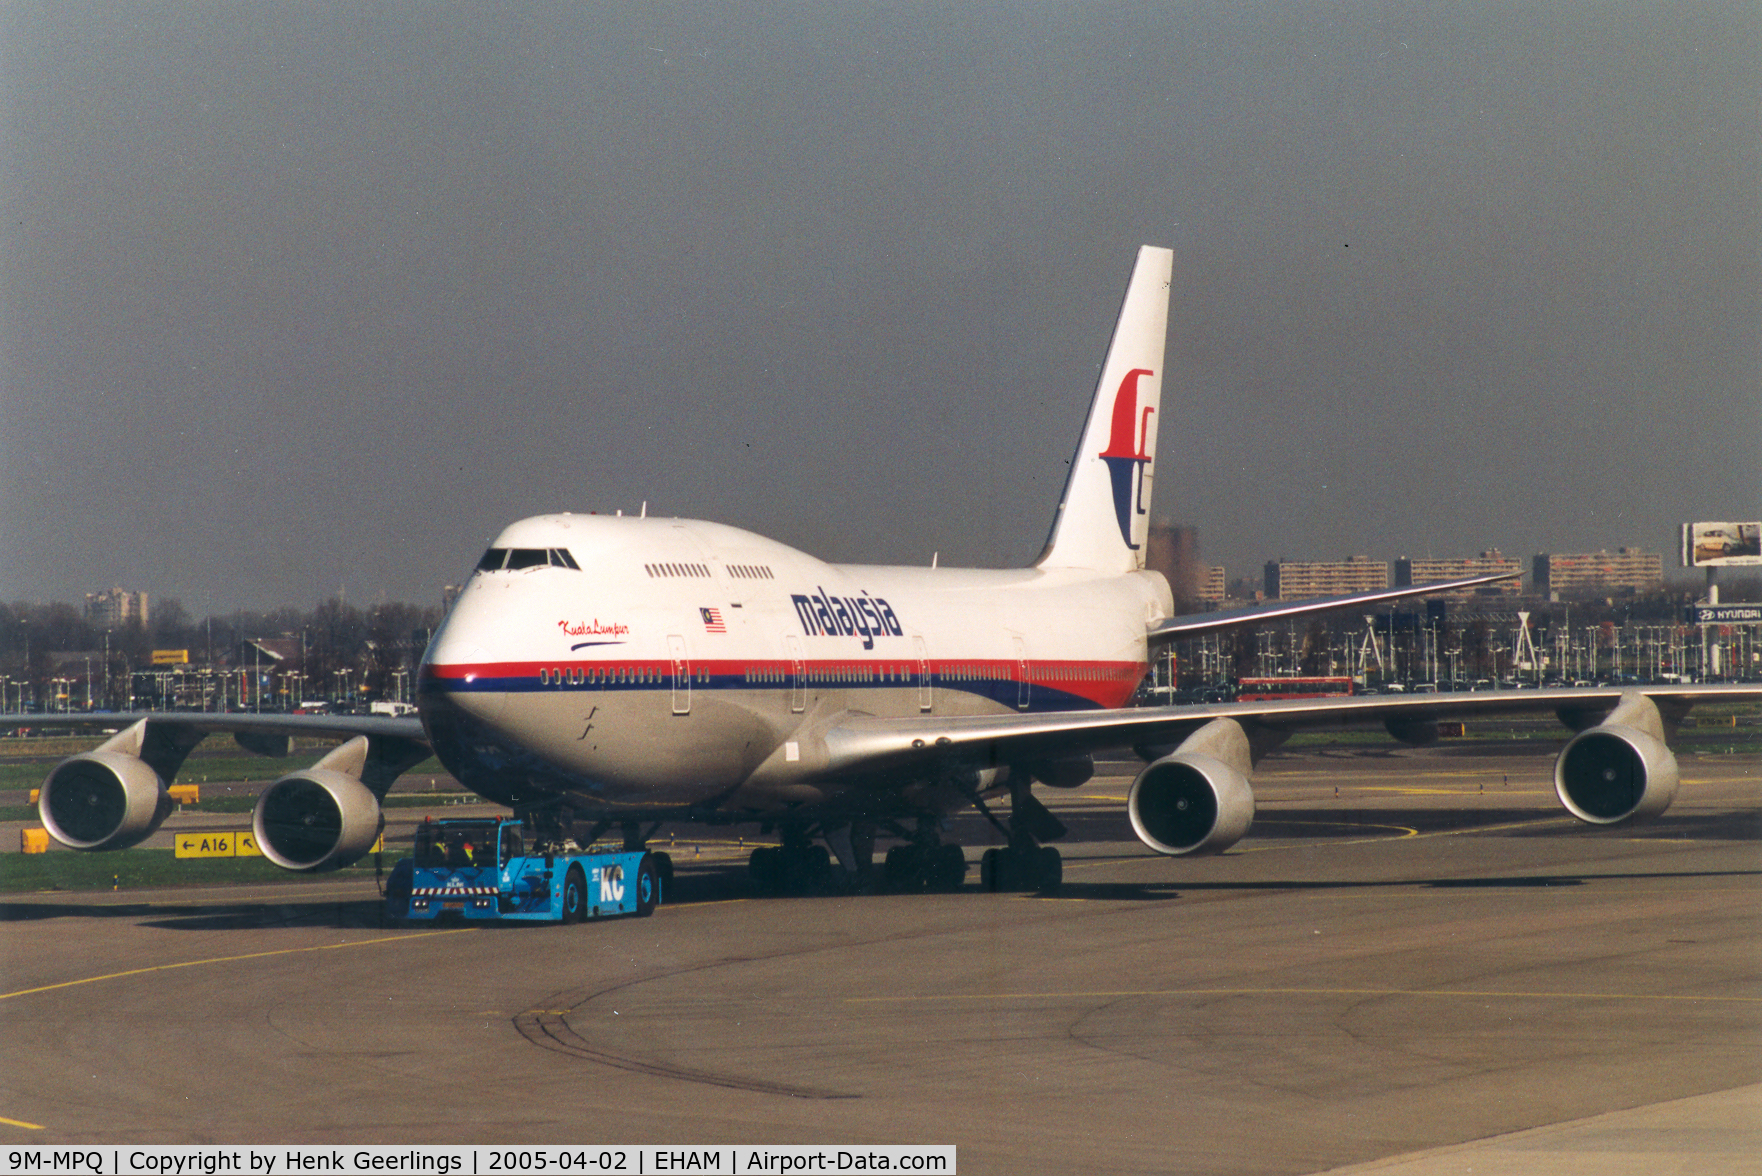 9M-MPQ, 2002 Boeing 747-4H6 C/N 29901, Malaysia